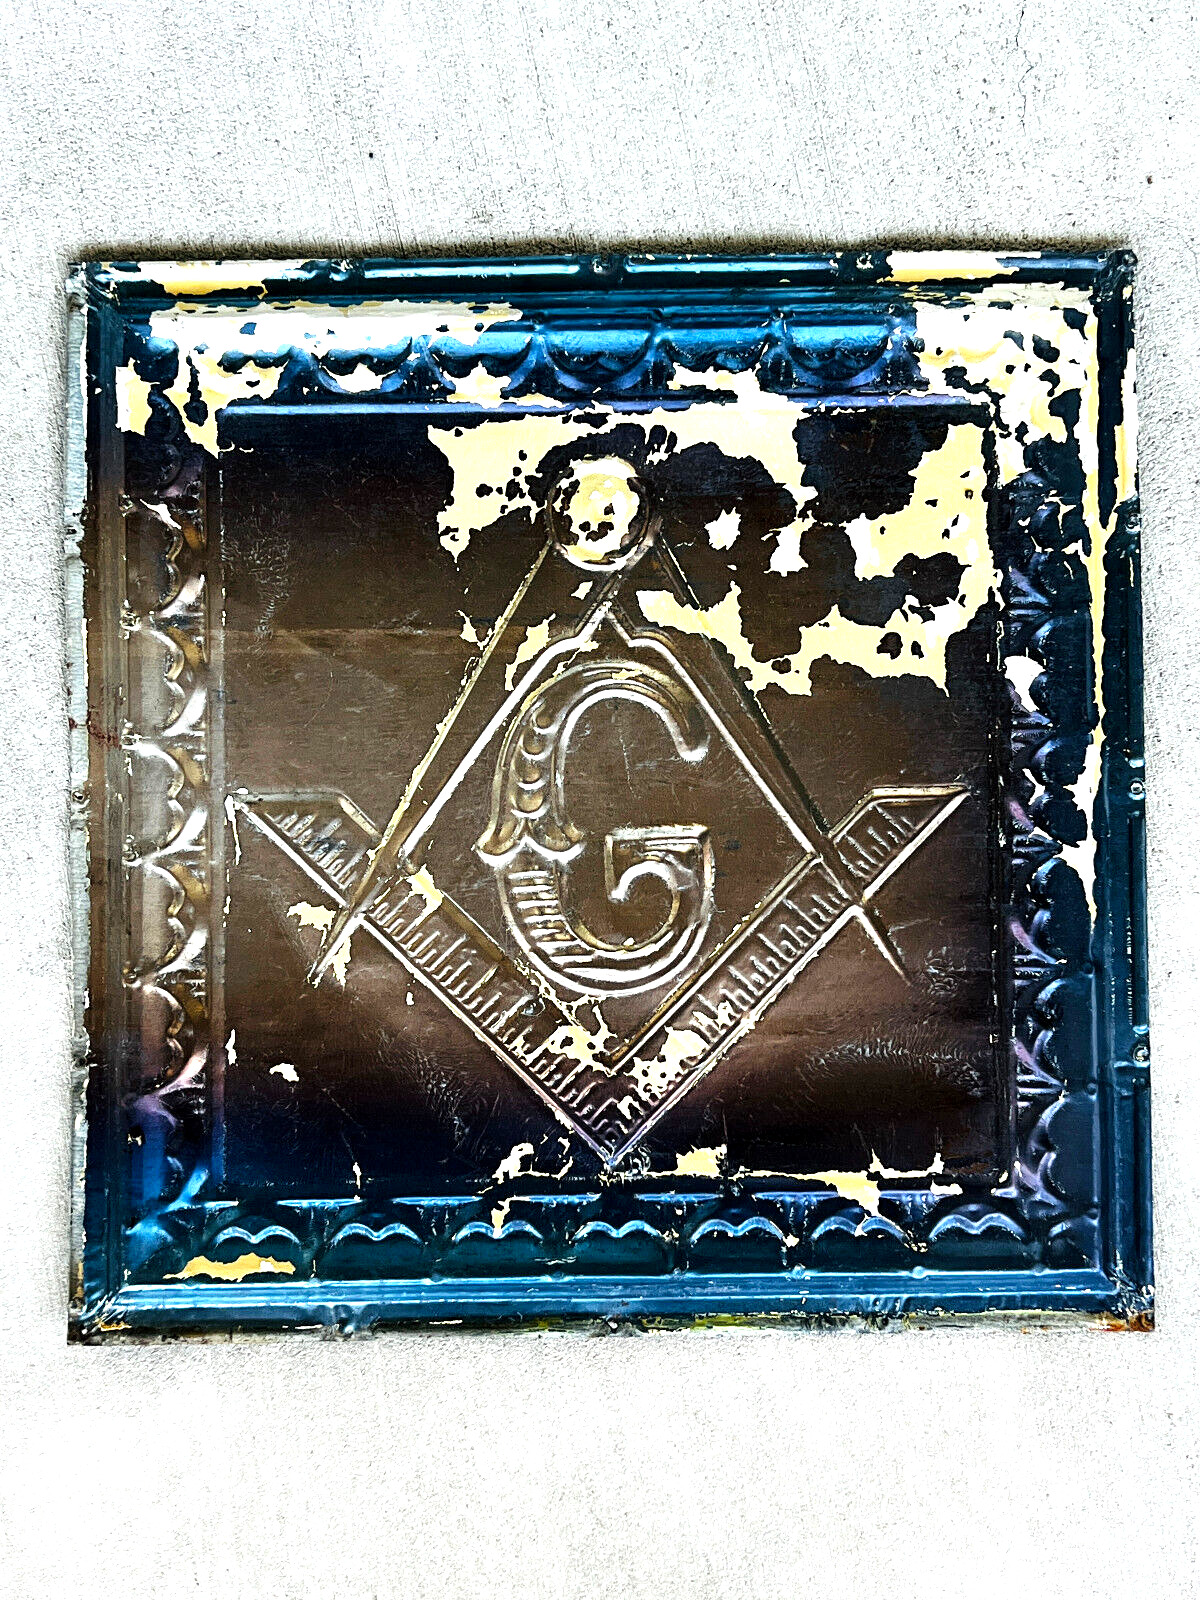 RARE Original Masonic Mason Embossed Tin Ceiling Tile WOW lodge hall 24x24